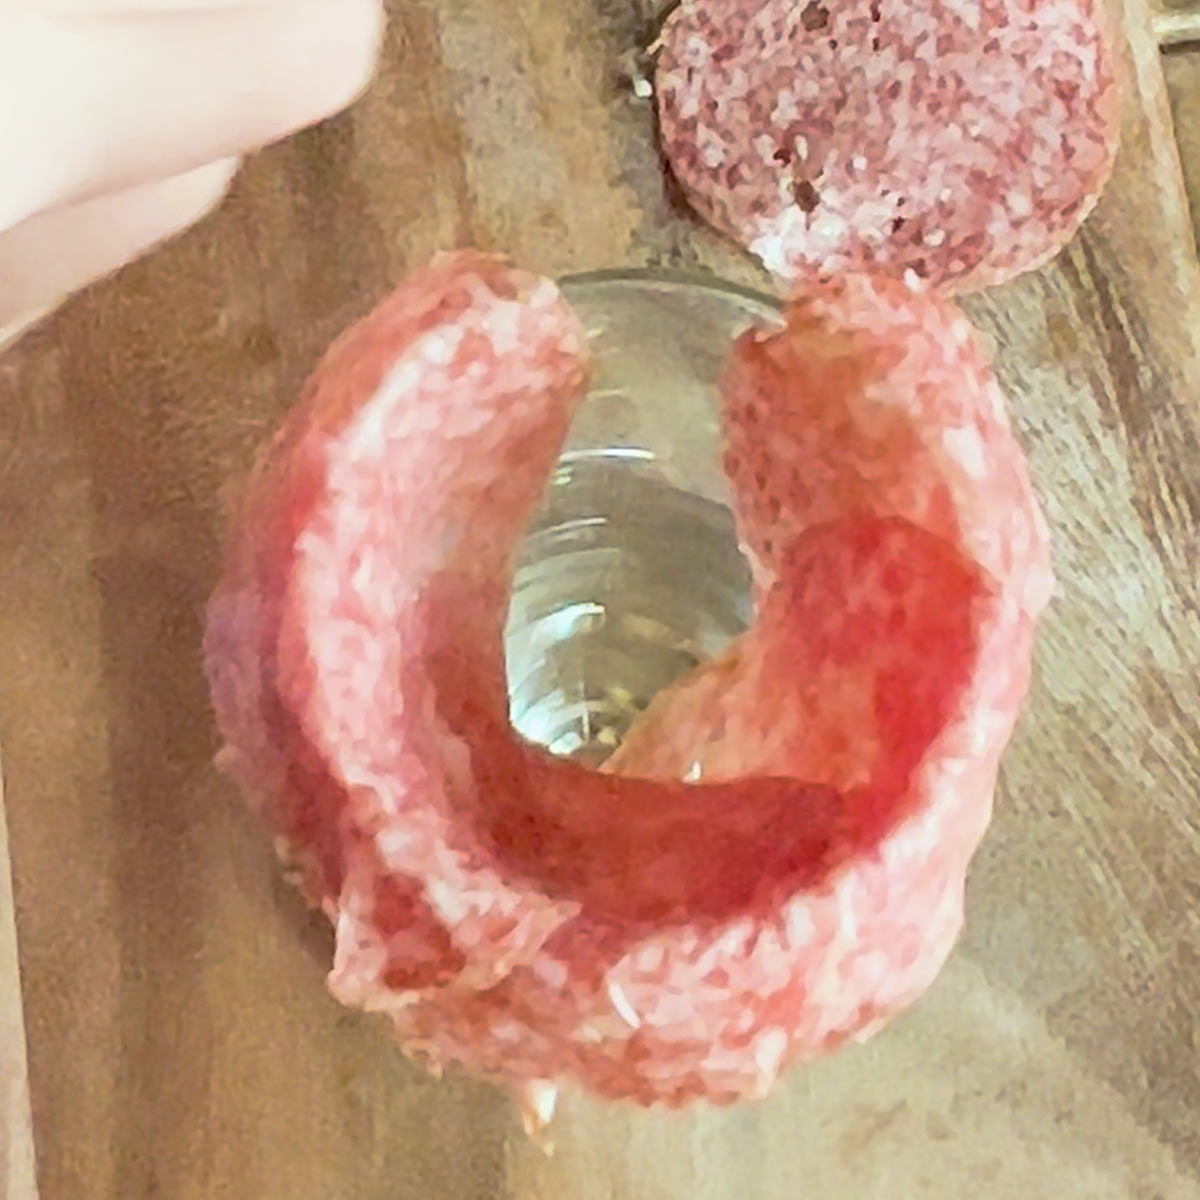 making salami rose with flexible salami slices